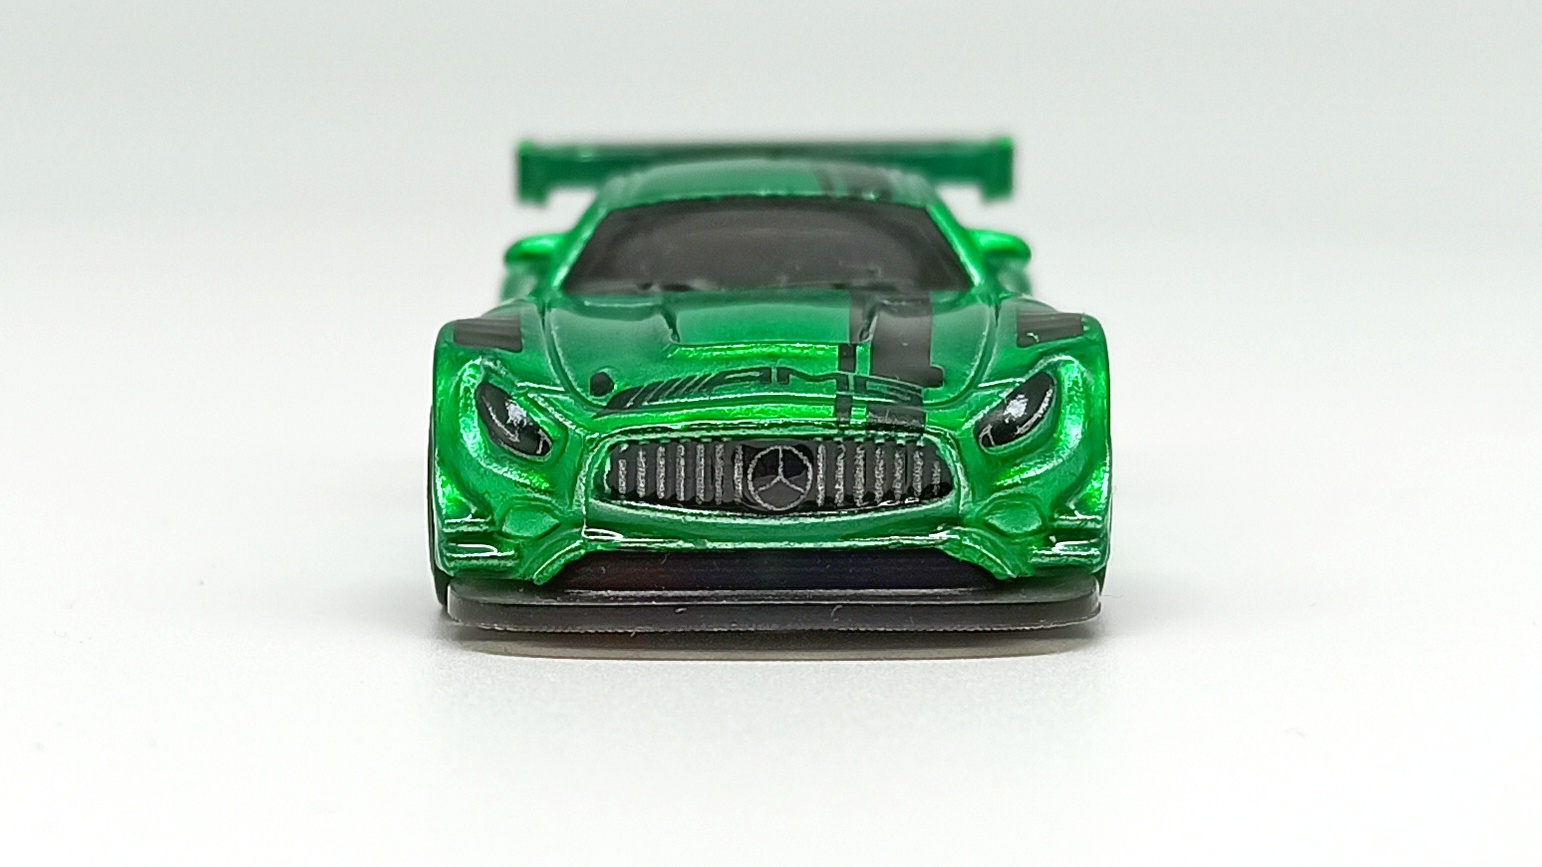 Hot Wheels id '16 Mercedes-AMG GT3 (GML21) 2021 Factory Fresh (03/04) spectraflame green front